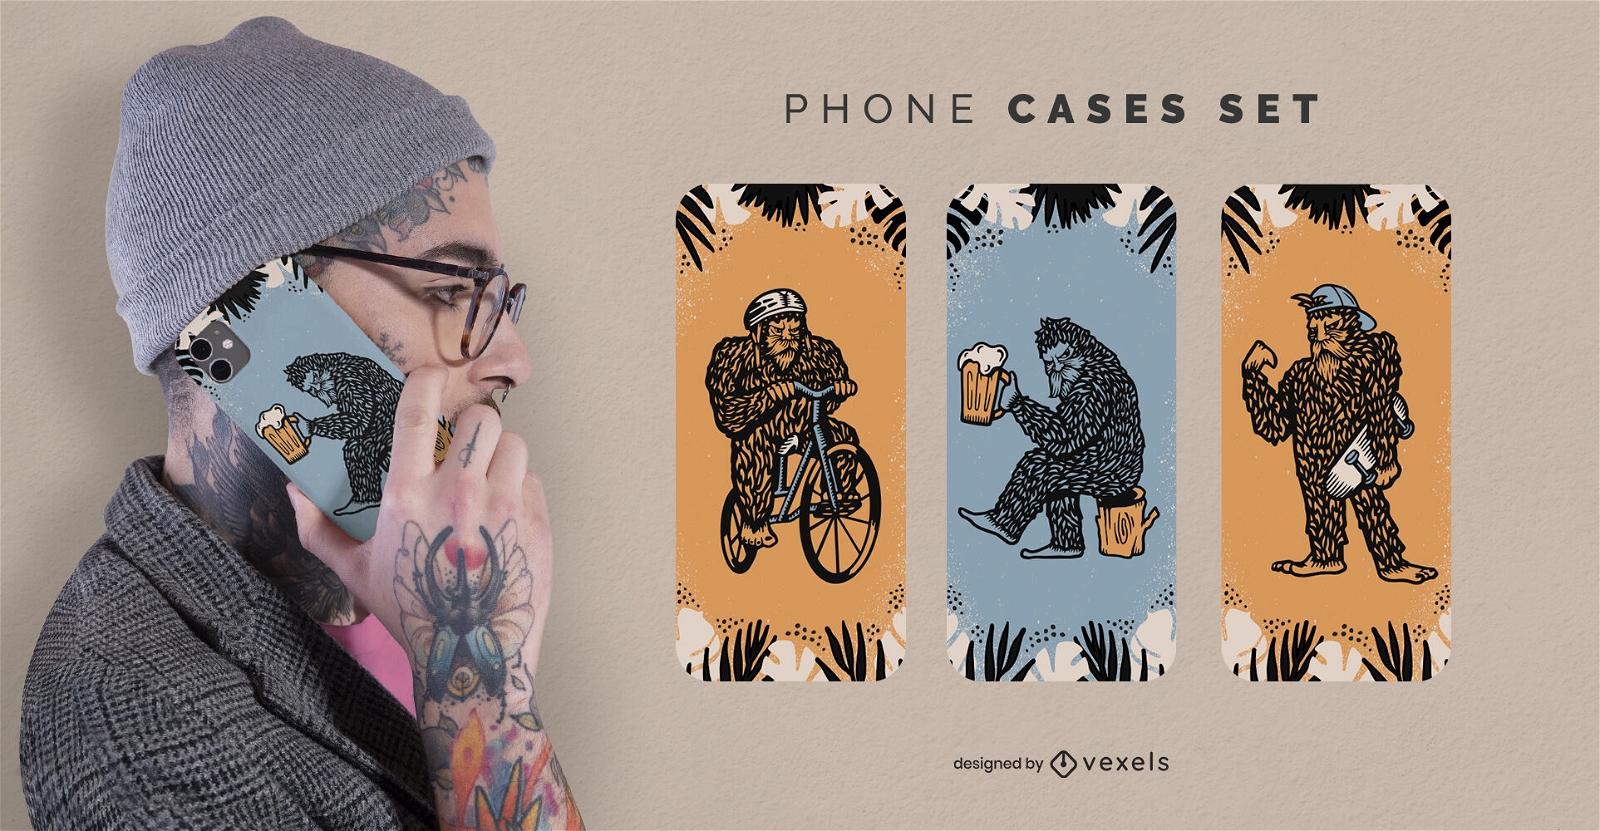 Big Foot phone case designs